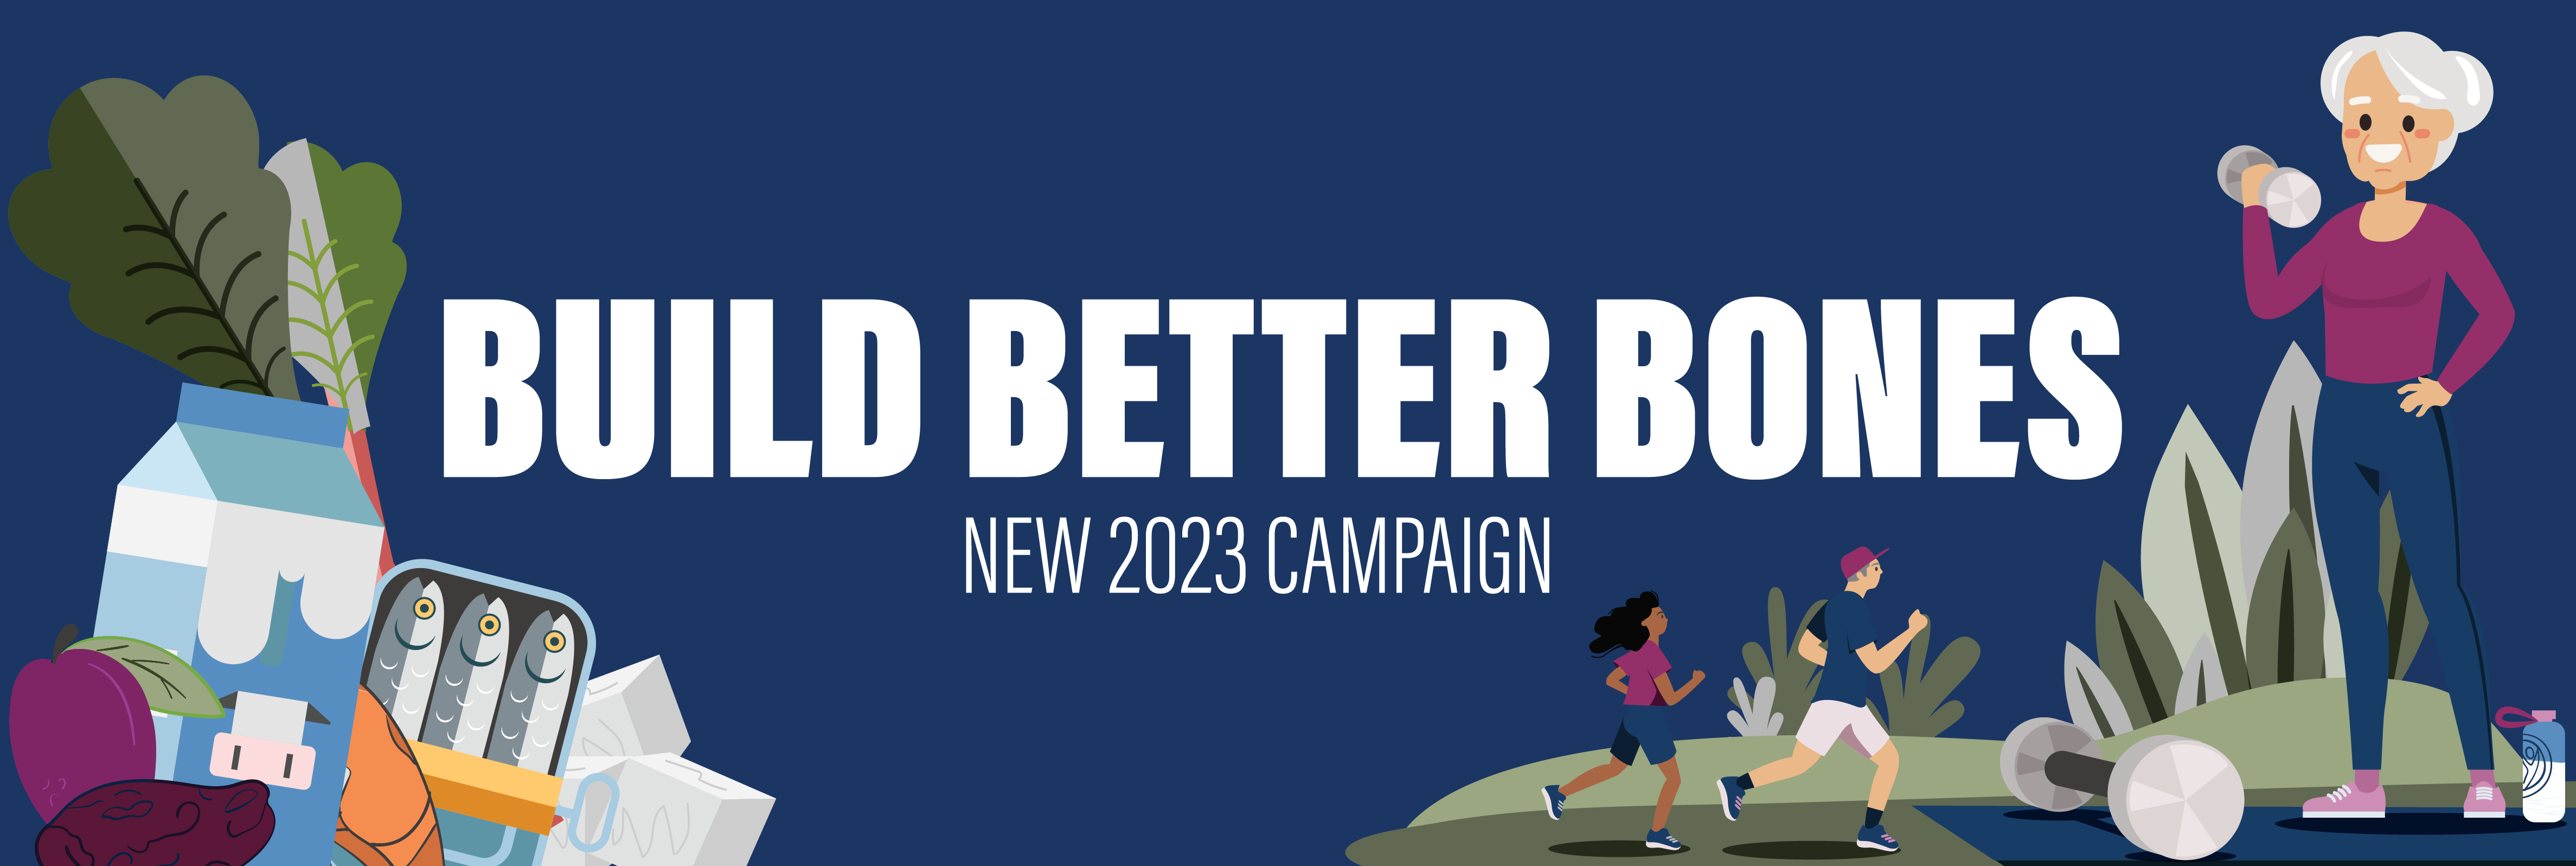 Build Better Bones! - New 2023 Campaign